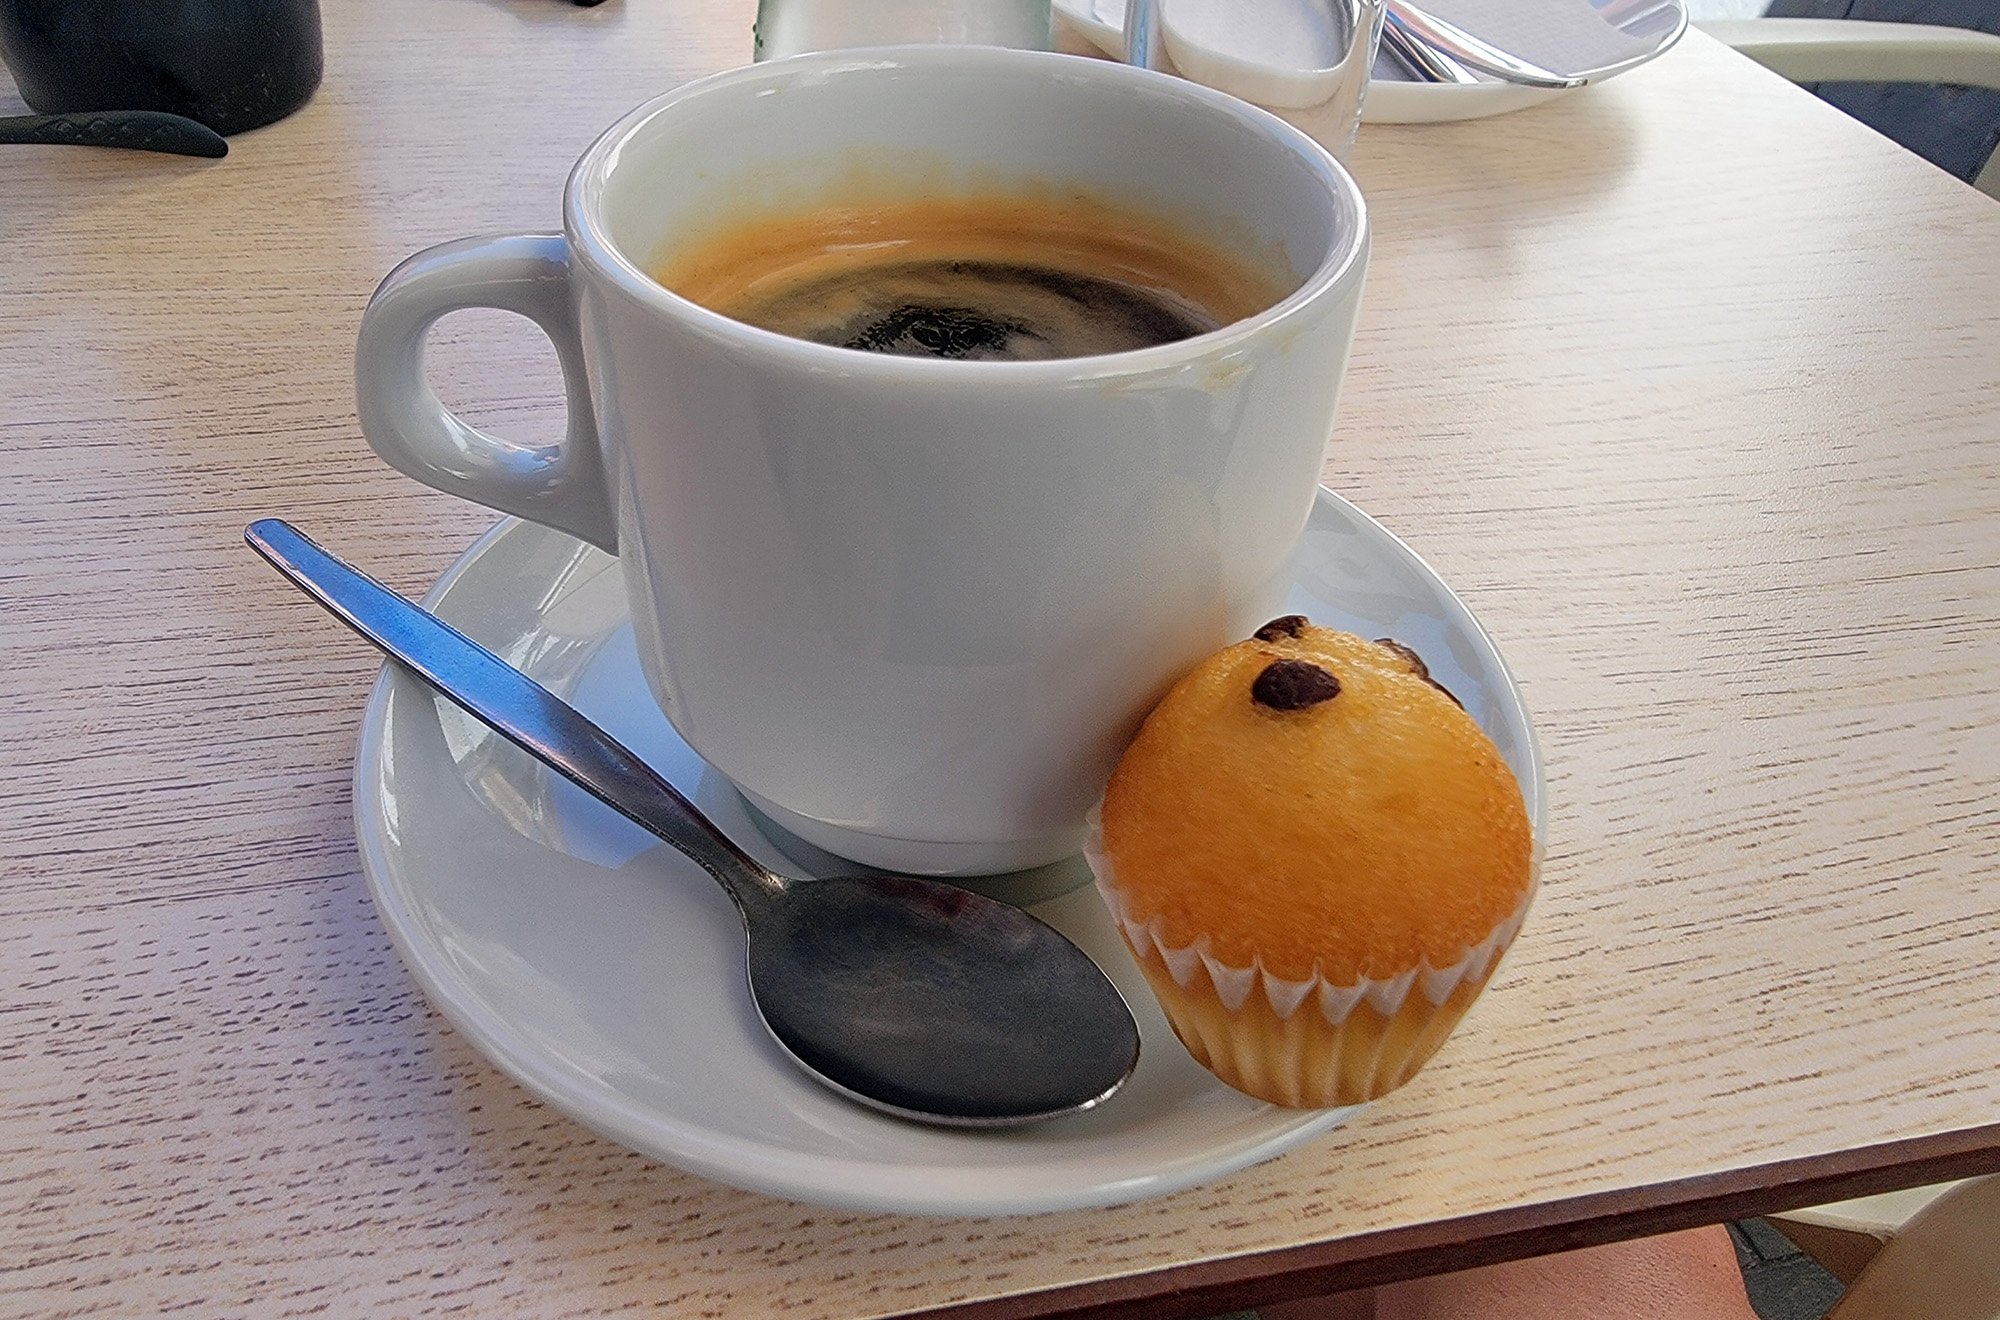 Got a mini muffin with my coffee. So damn euro.